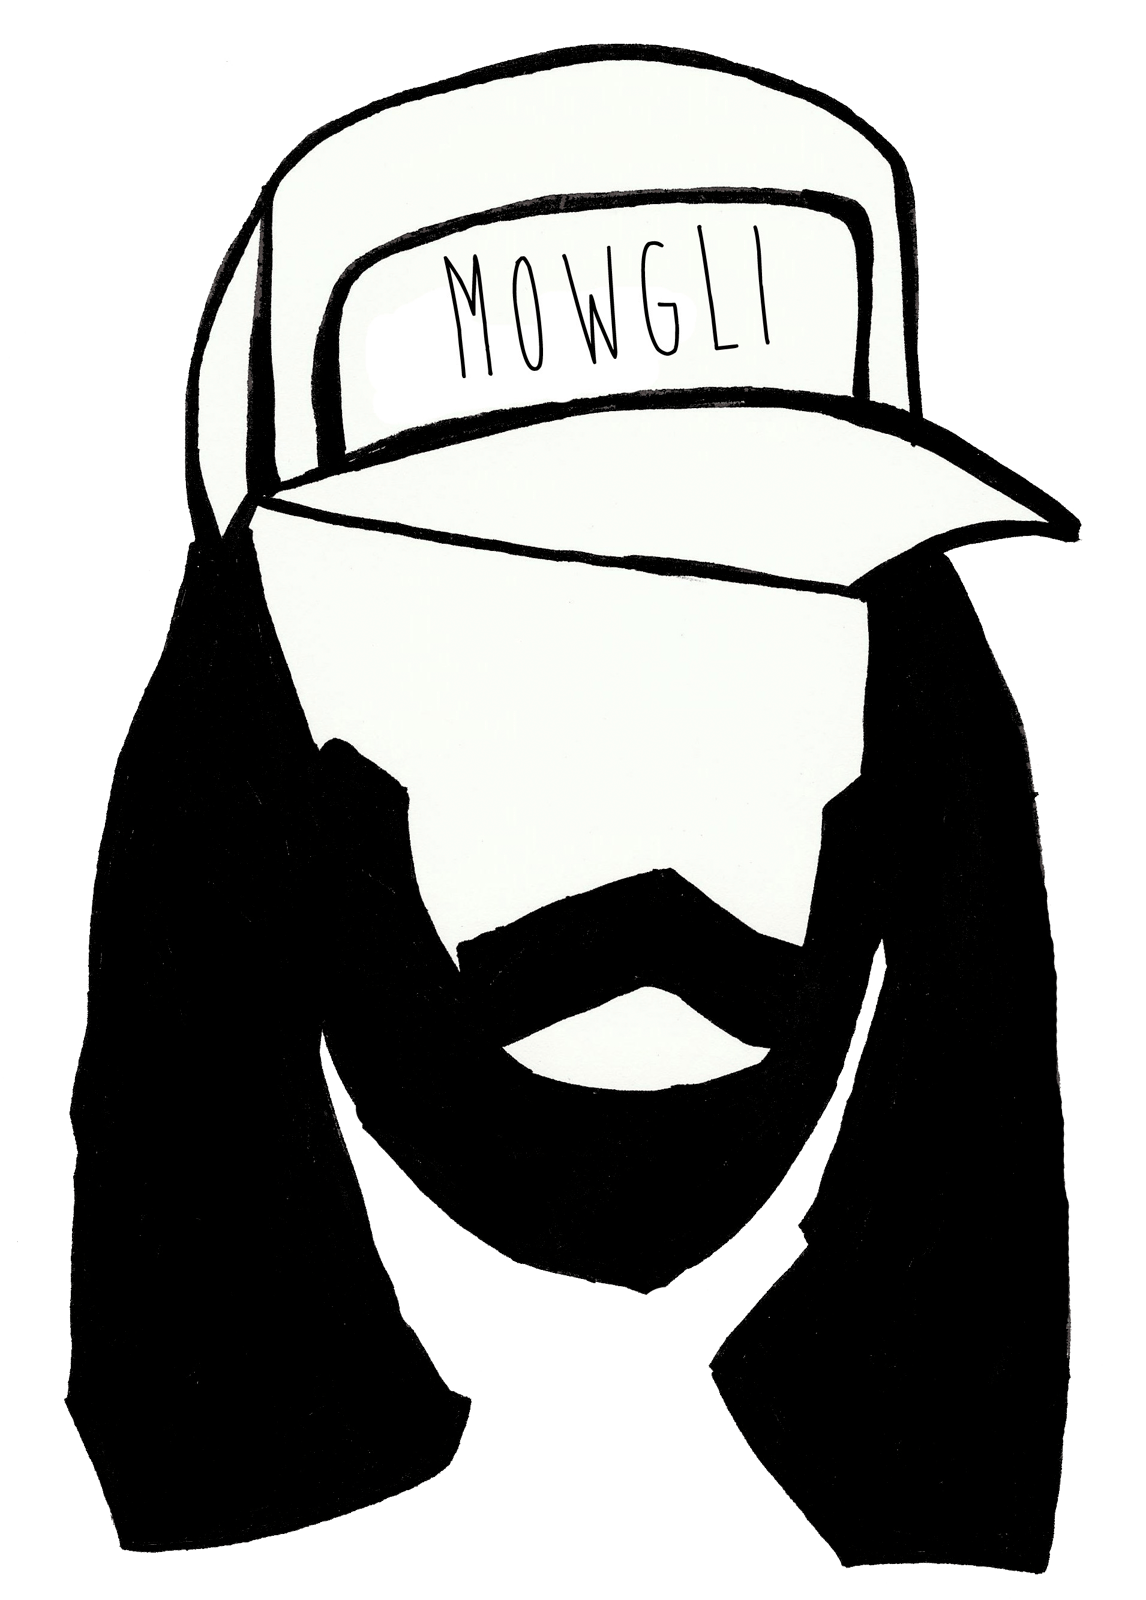 MowgliArt